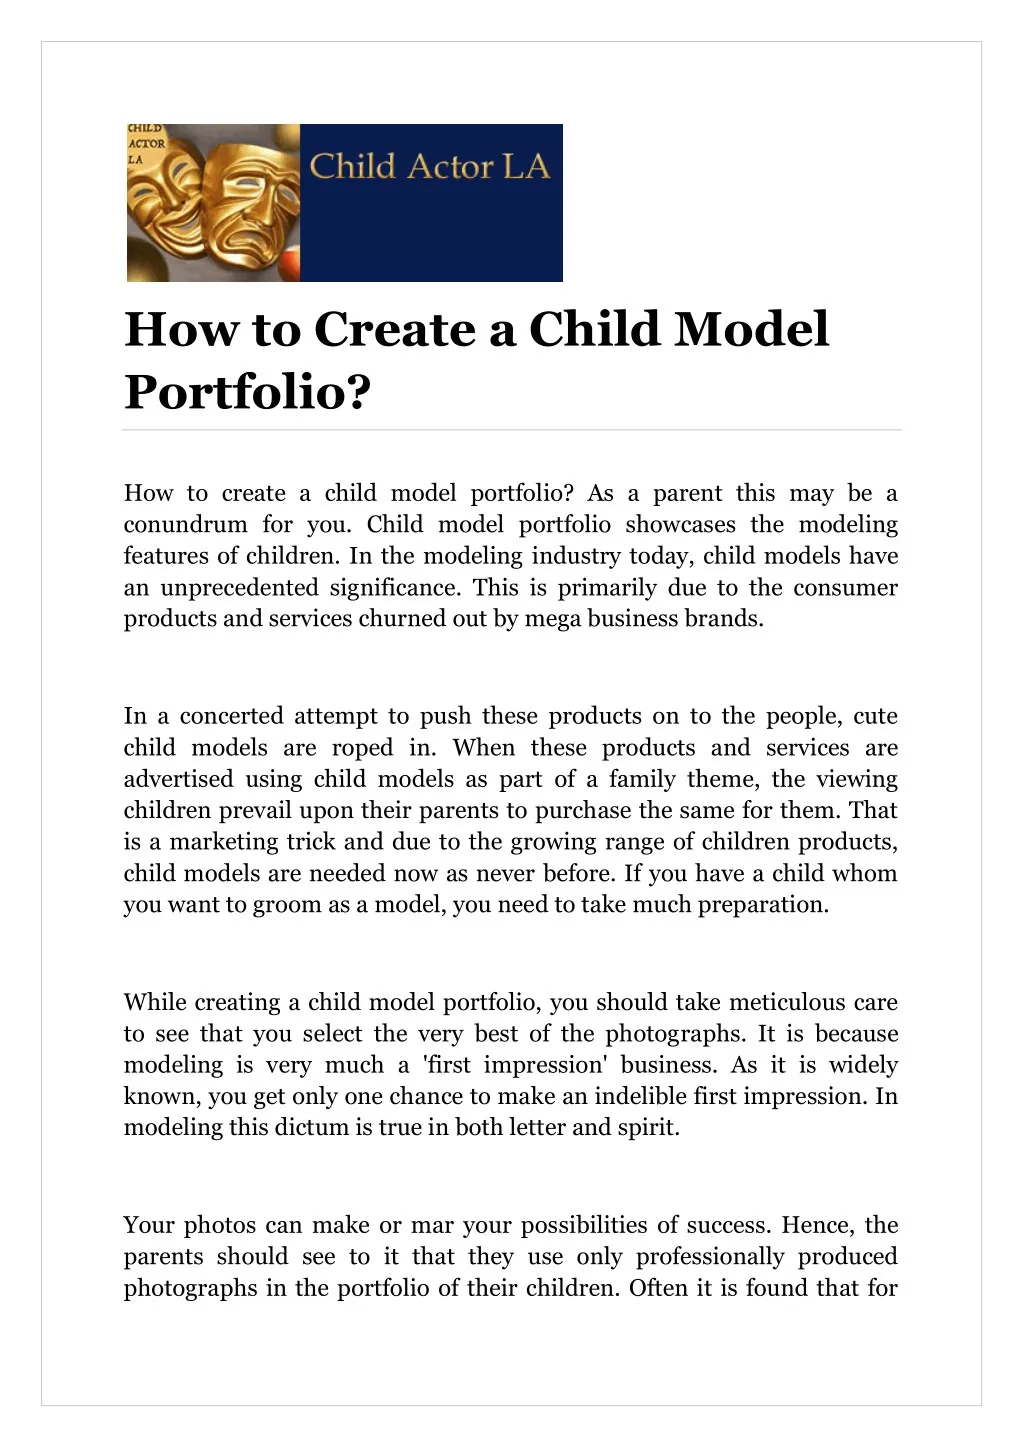 how to create a child model portfolio